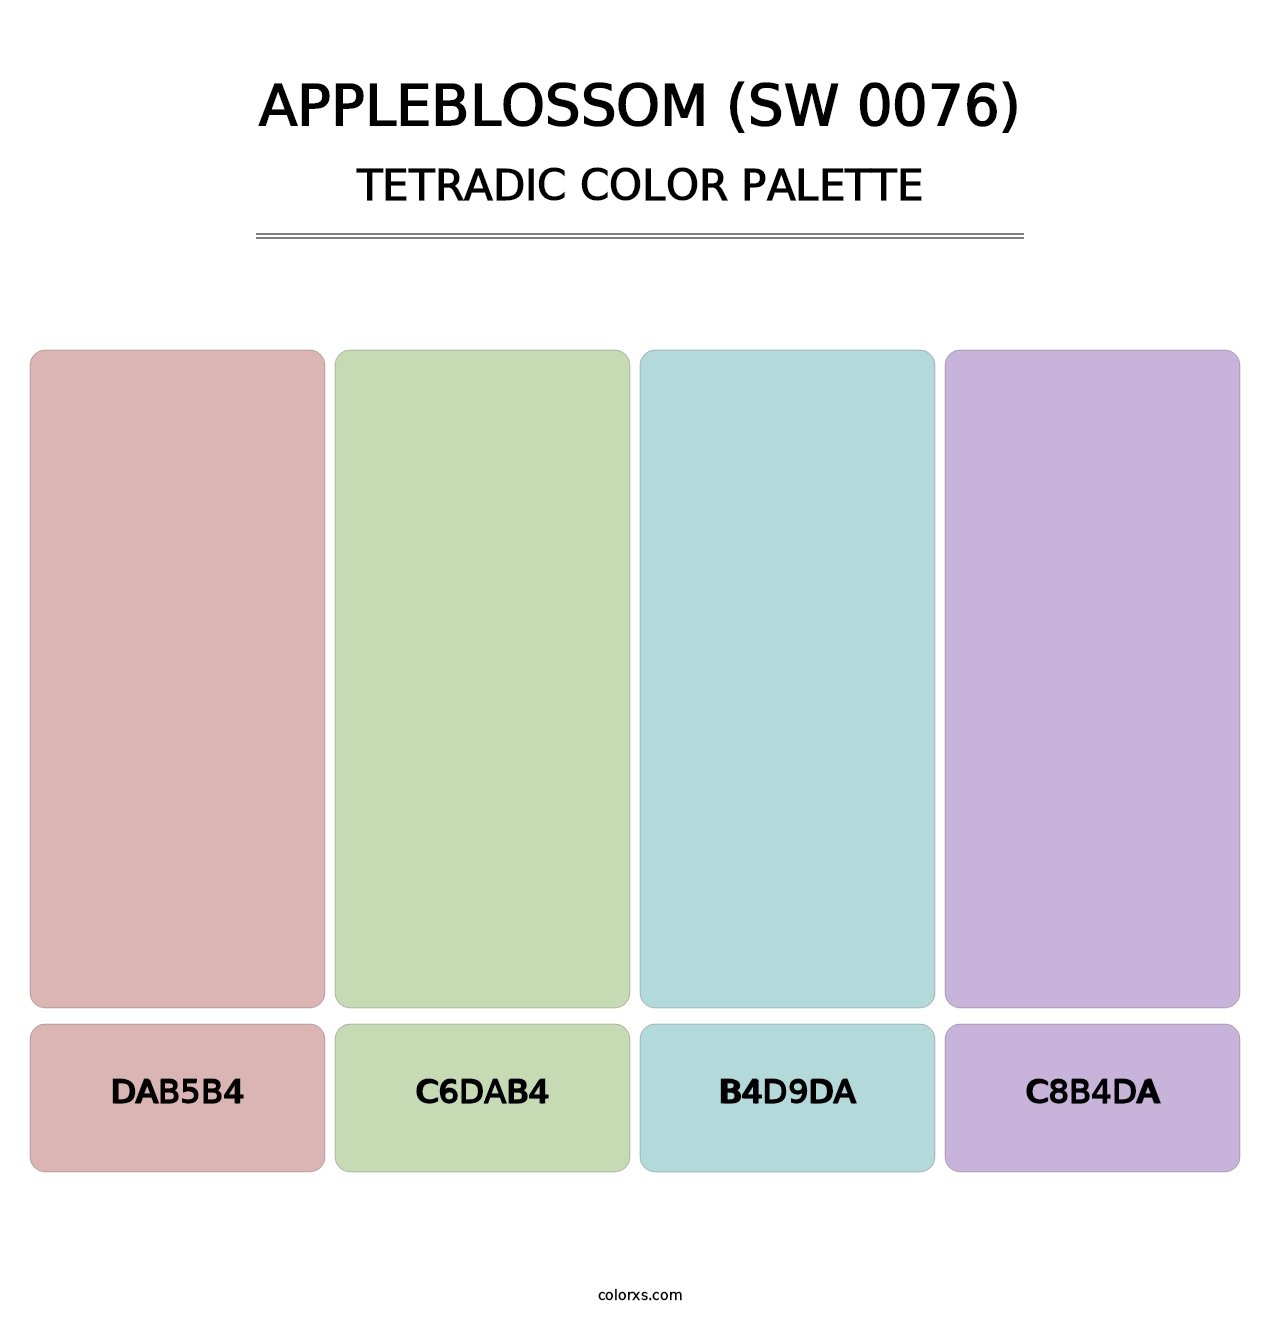 Appleblossom (SW 0076) - Tetradic Color Palette